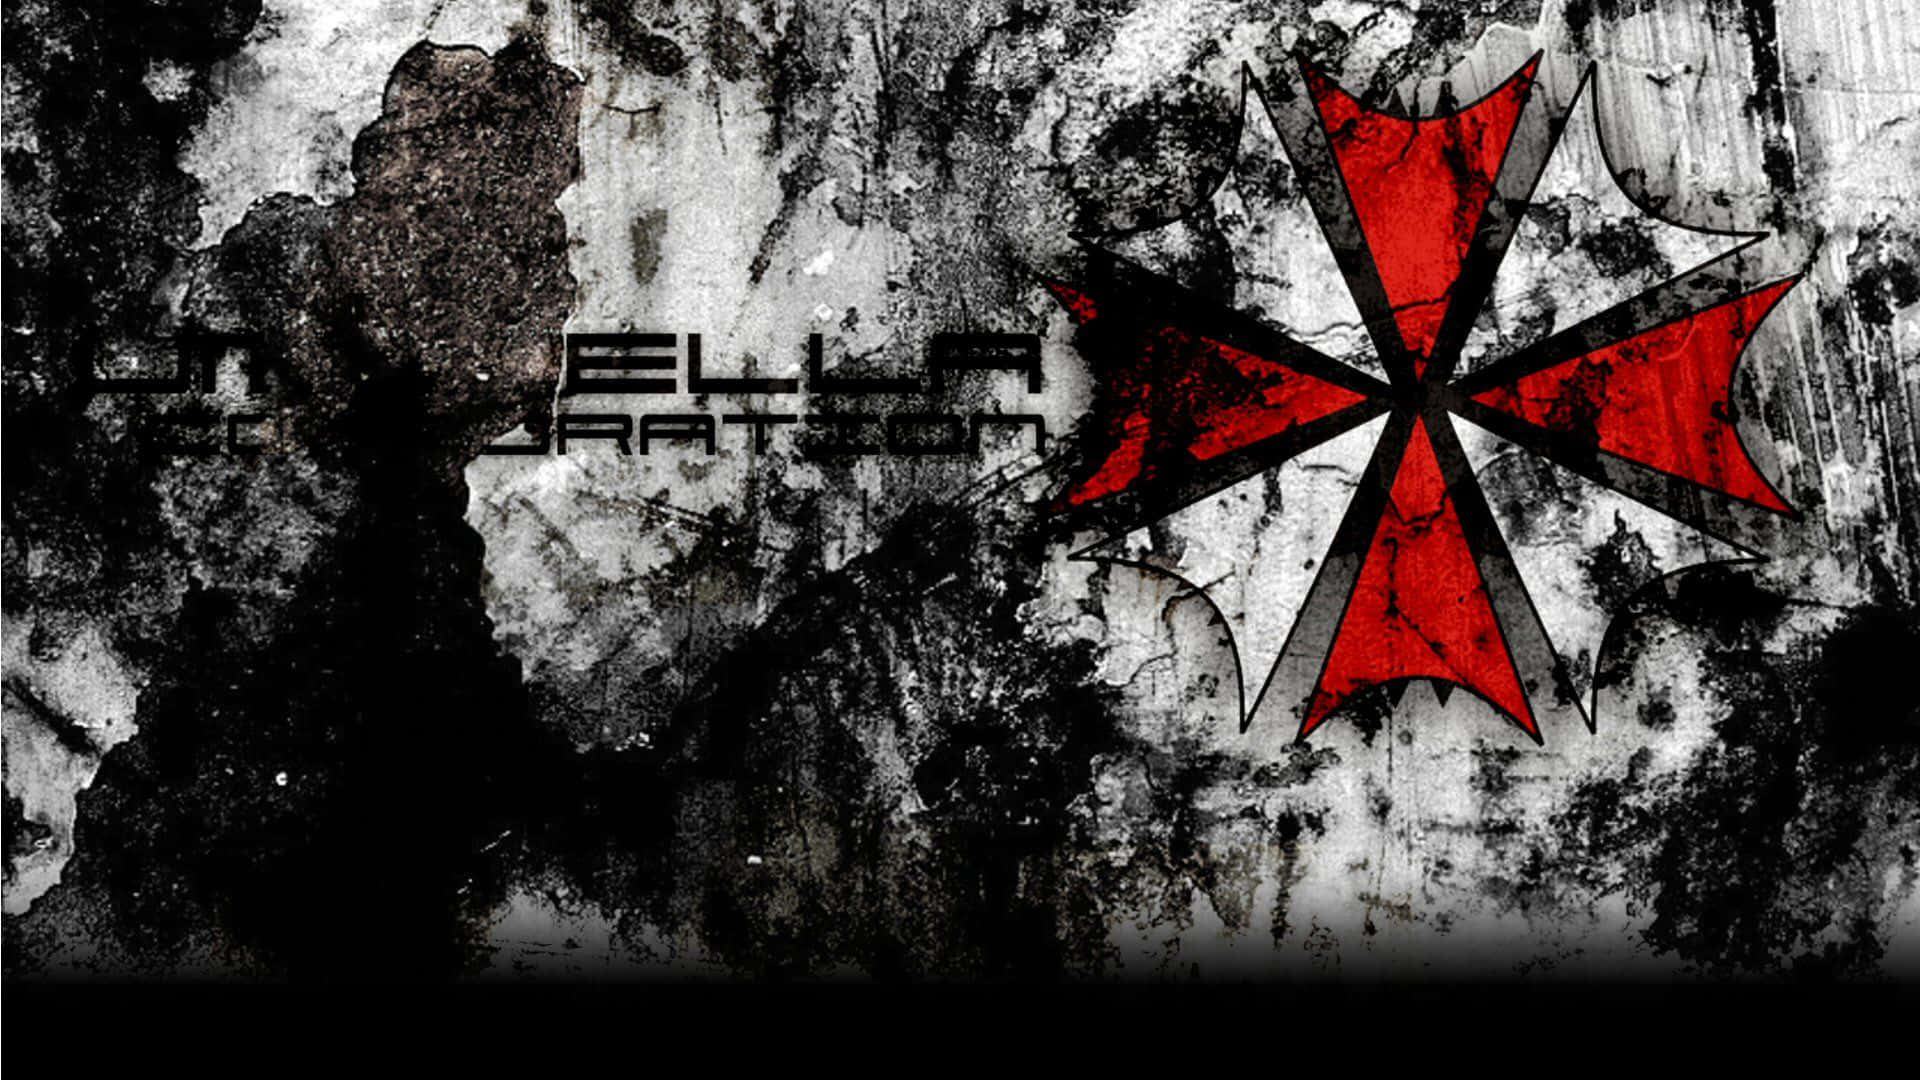 Download Umbrella Corporation Logo In Resident Evil Wallpaper ...